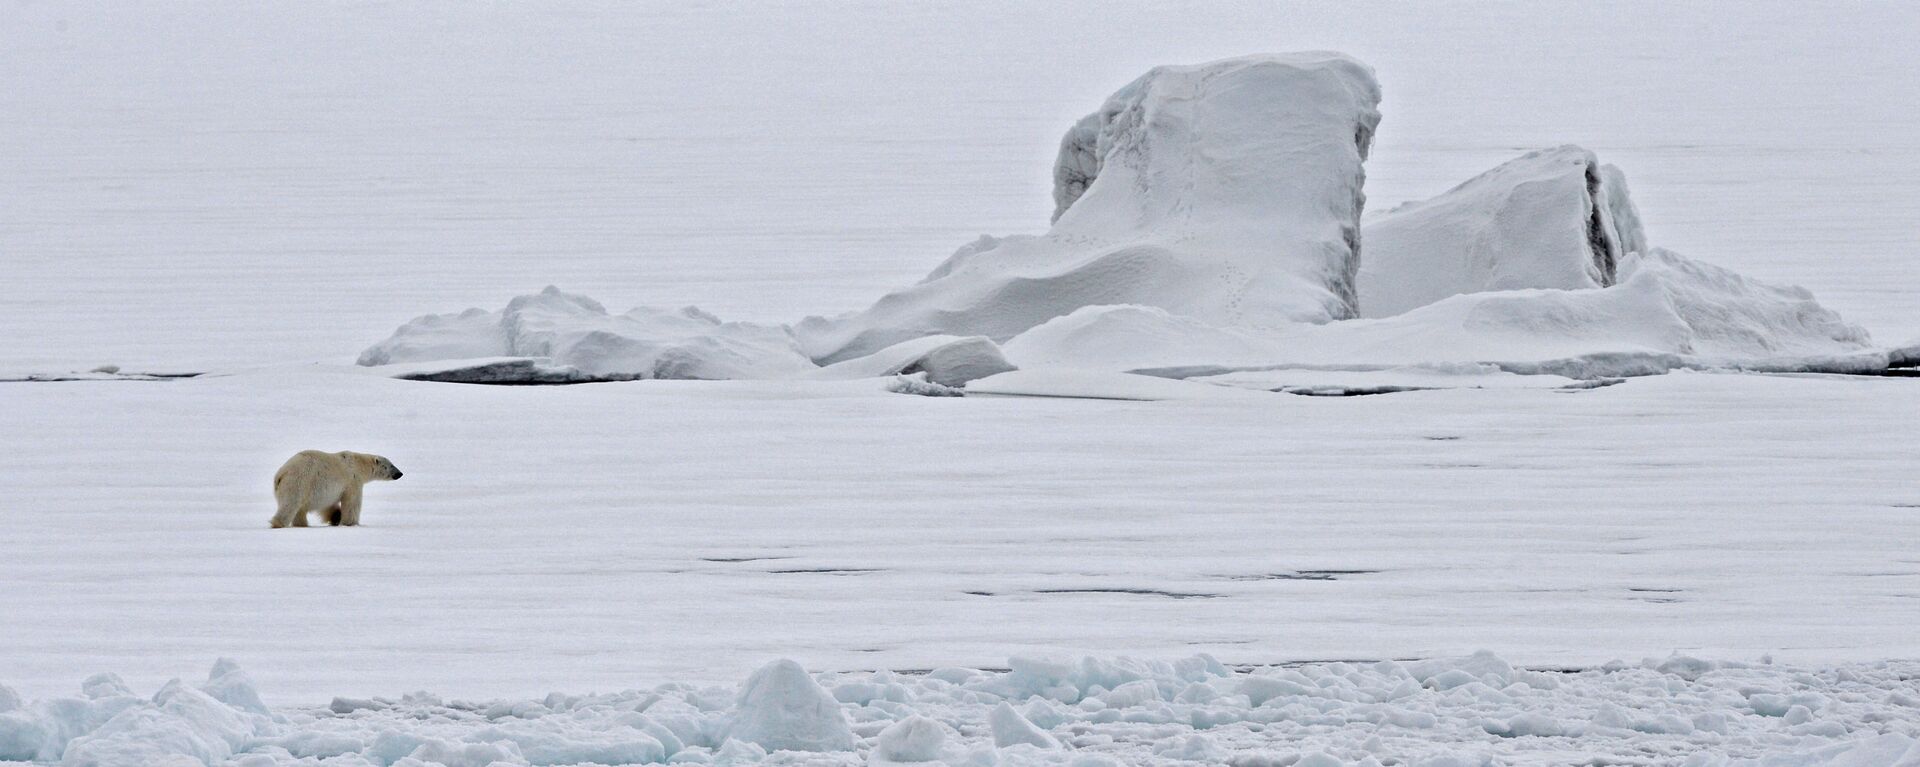 Un oso polar en un témpano de hielo en el Océano Ártico - Sputnik Mundo, 1920, 24.04.2021